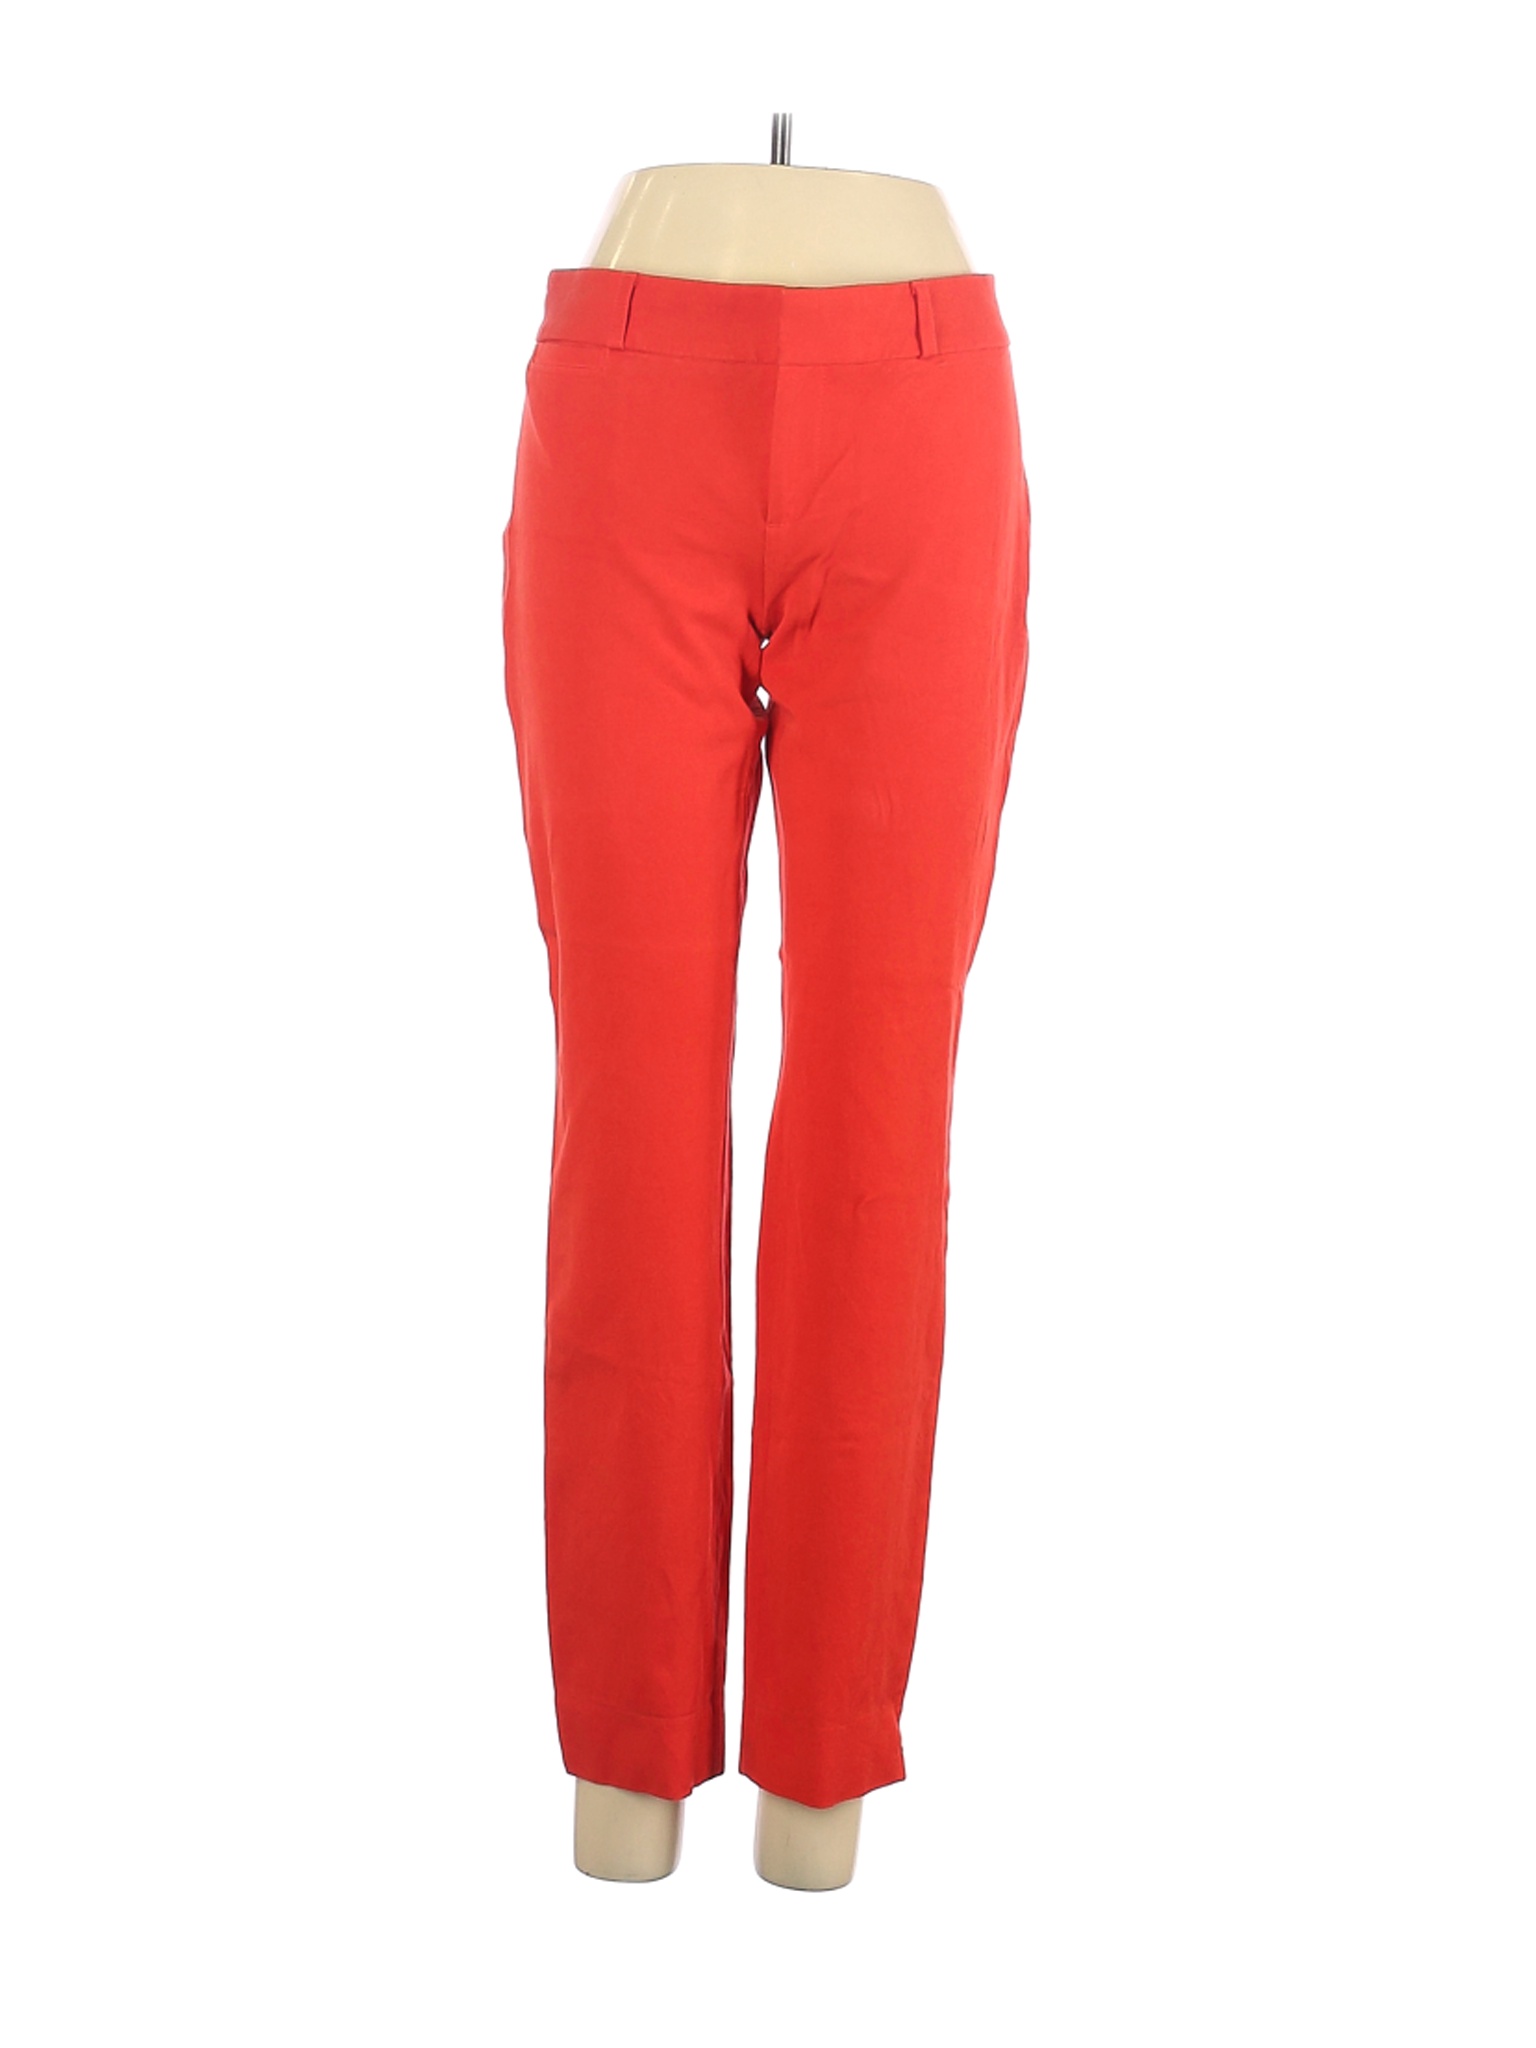 Banana Republic Women Orange Dress Pants 2 | eBay